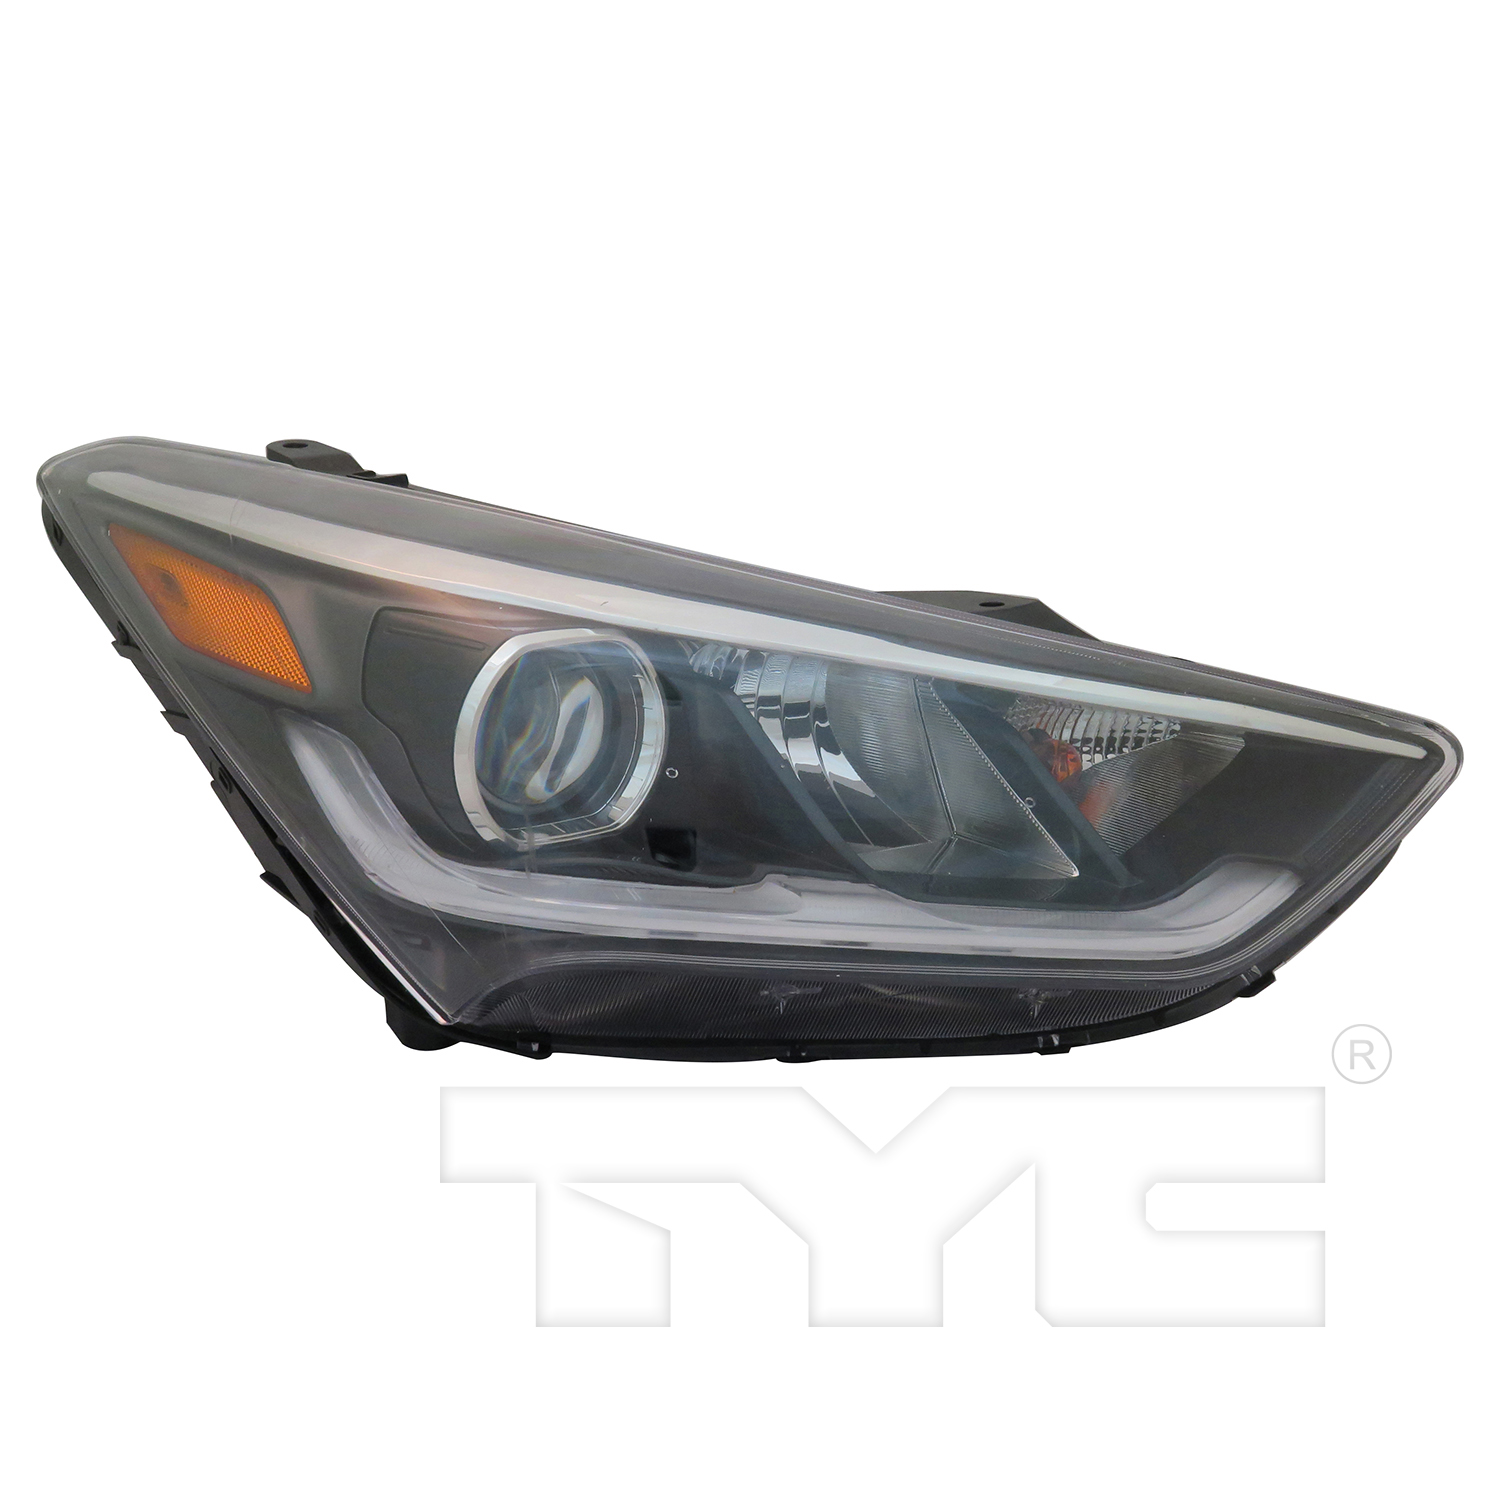 Aftermarket HEADLIGHTS for HYUNDAI - SANTA FE XL, SANTA FE XL,19-19,RT Headlamp assy composite